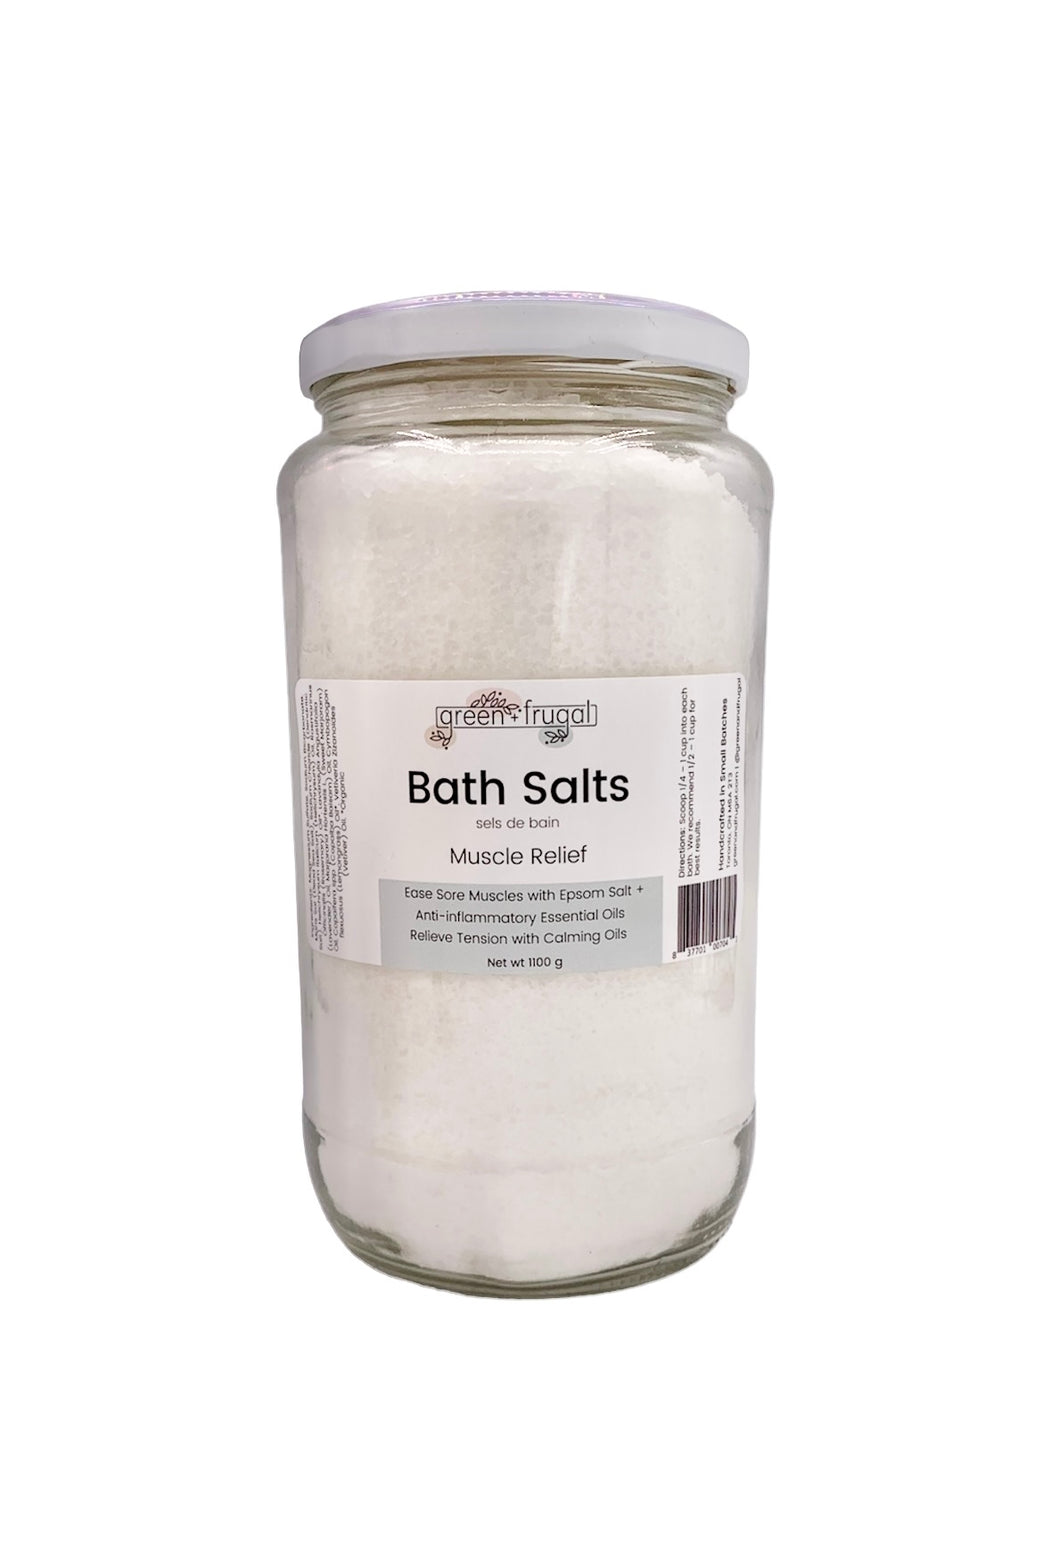 Bath Salts Muscle Relief